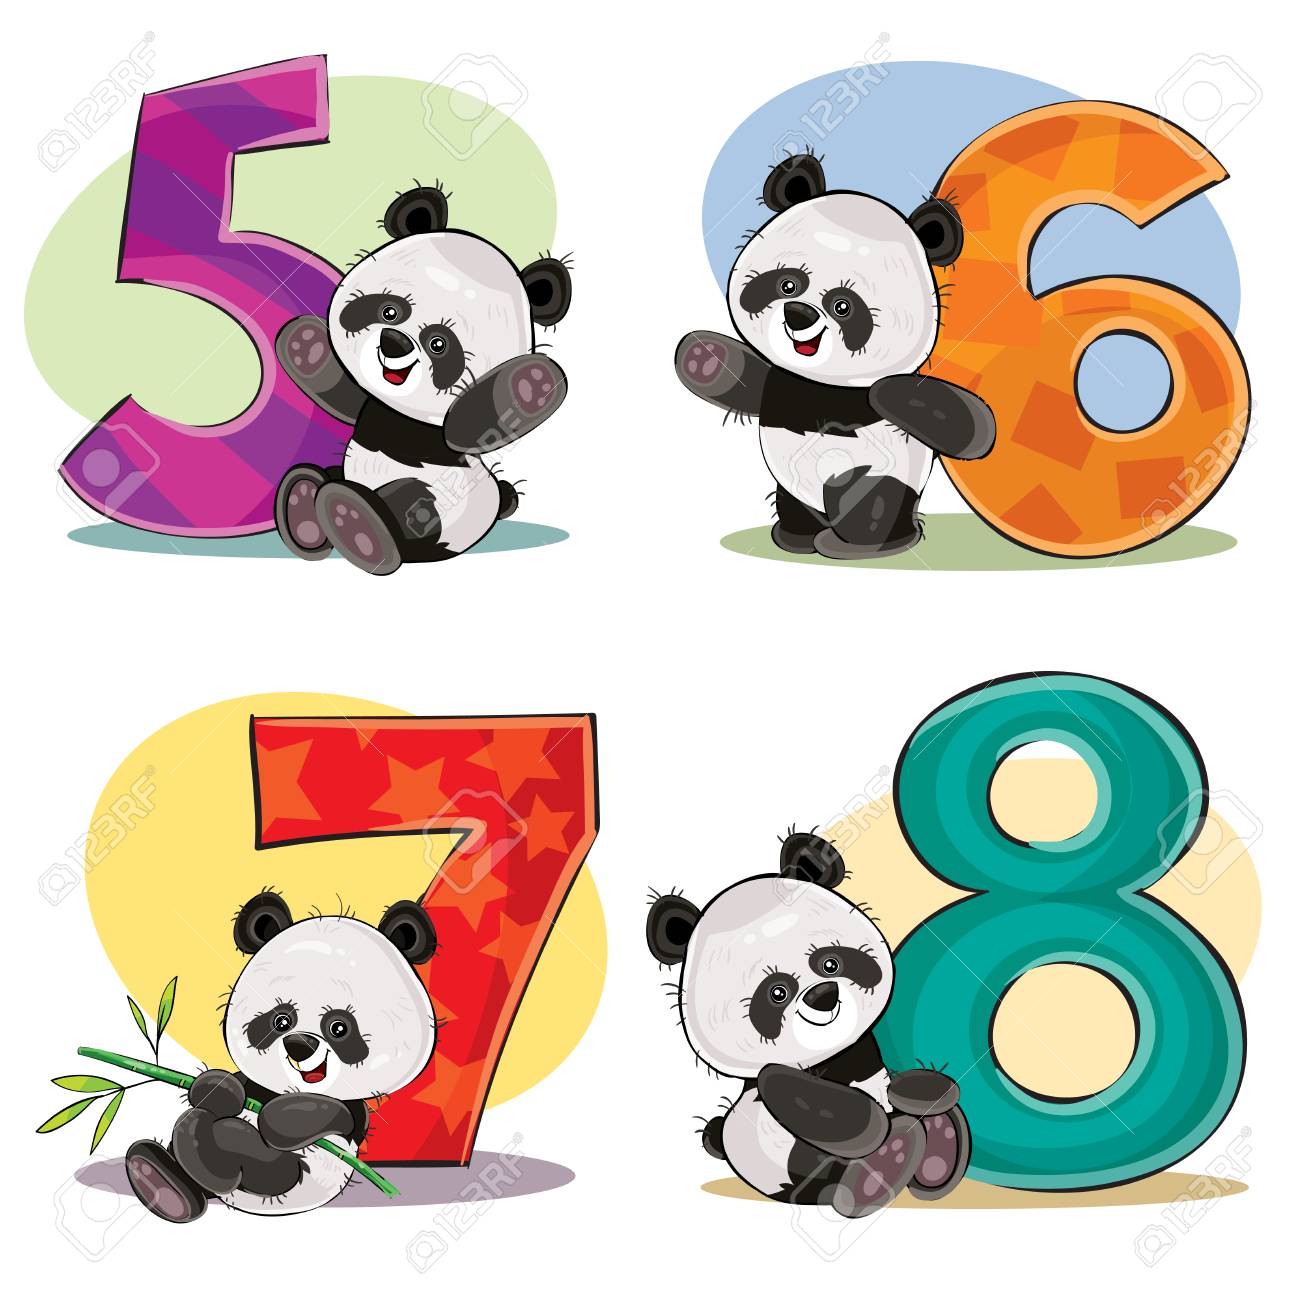 Set of cute baby panda bears with numbers vector cartoon illustration.